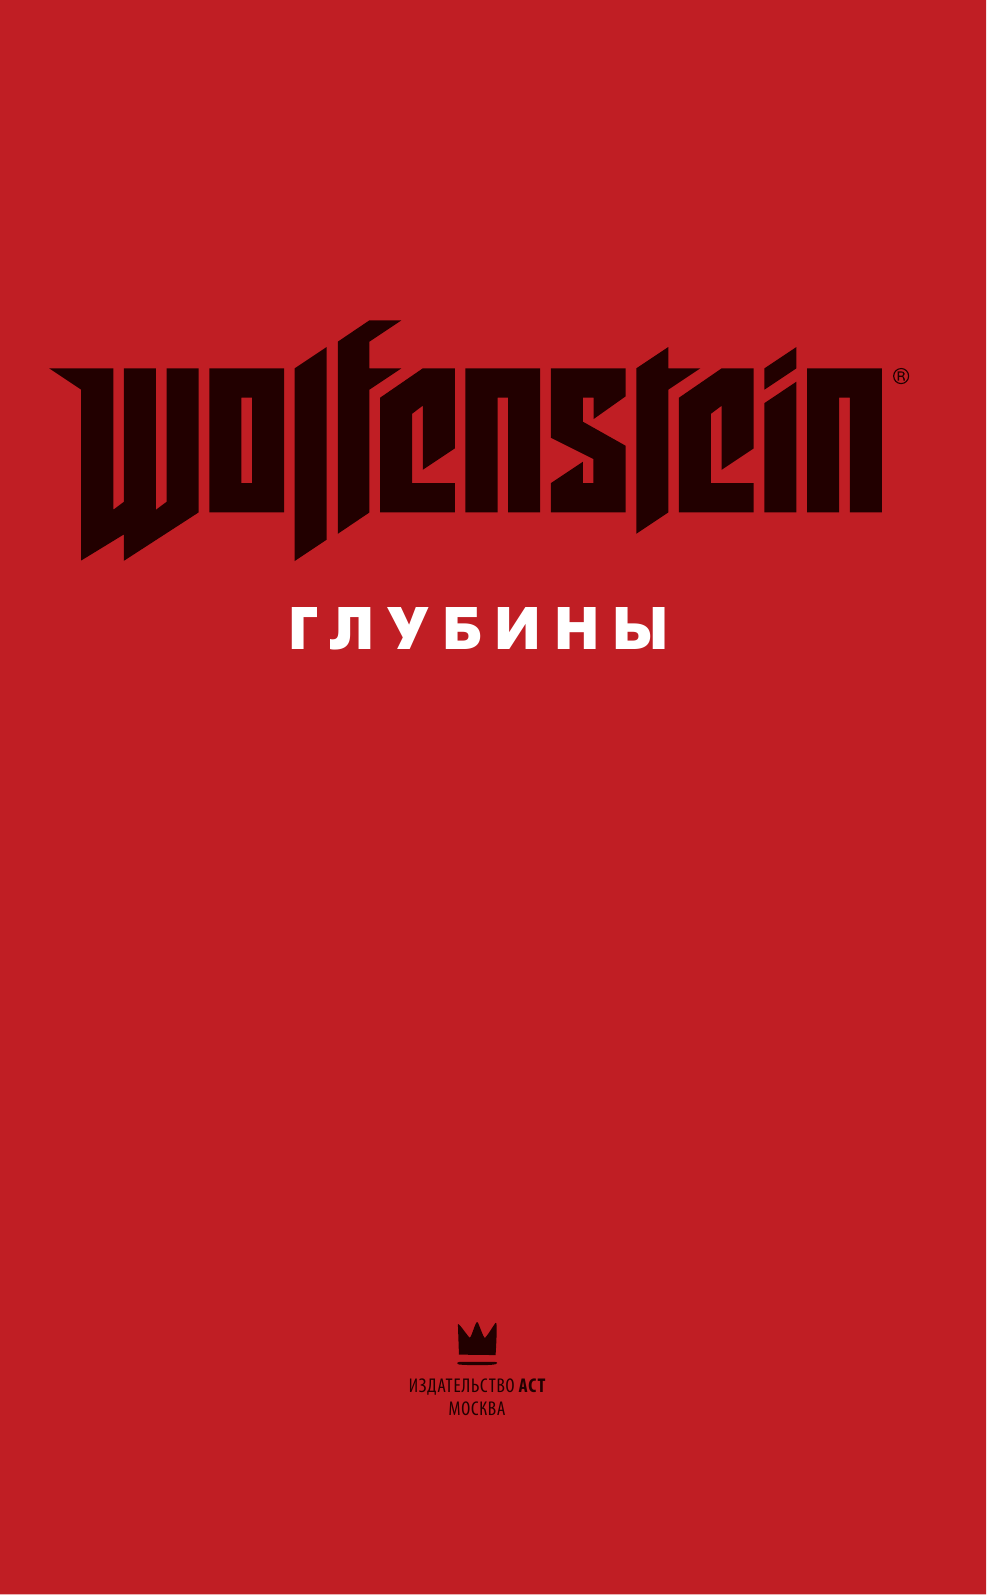 Уоттерс Дэн Wolfenstein: Глубины - страница 2